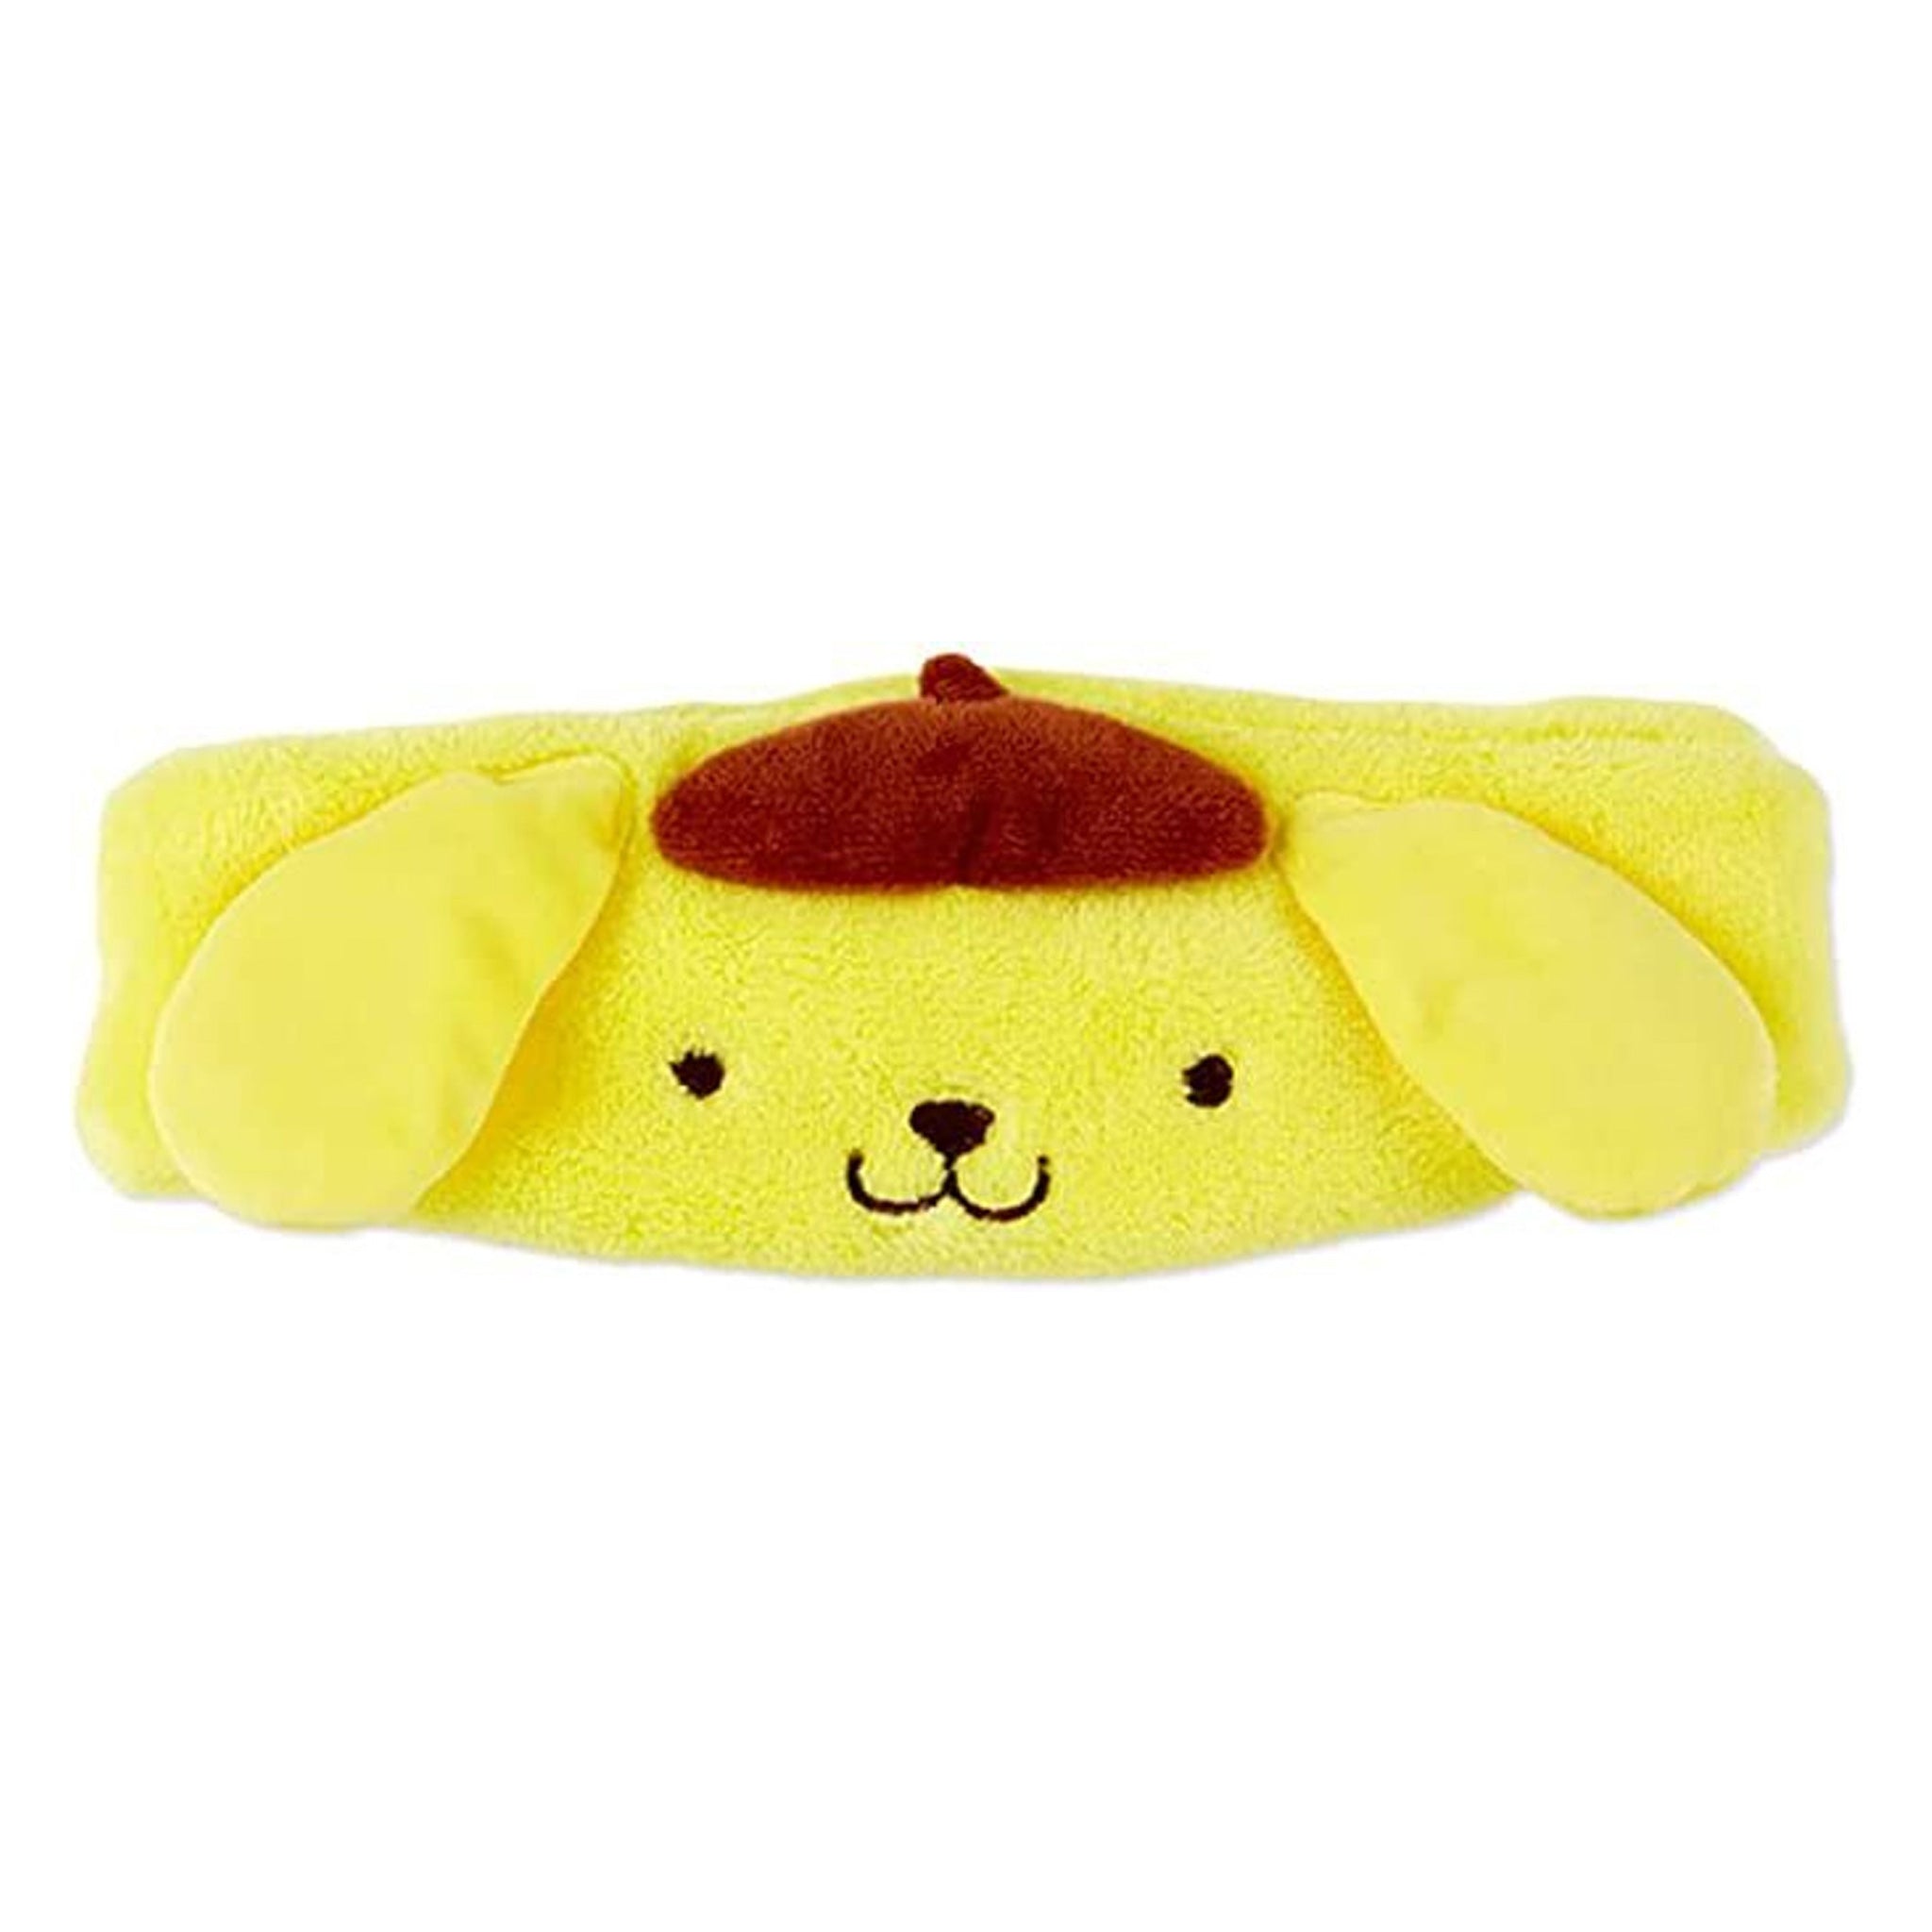 Sanrio Plush Spa Headband